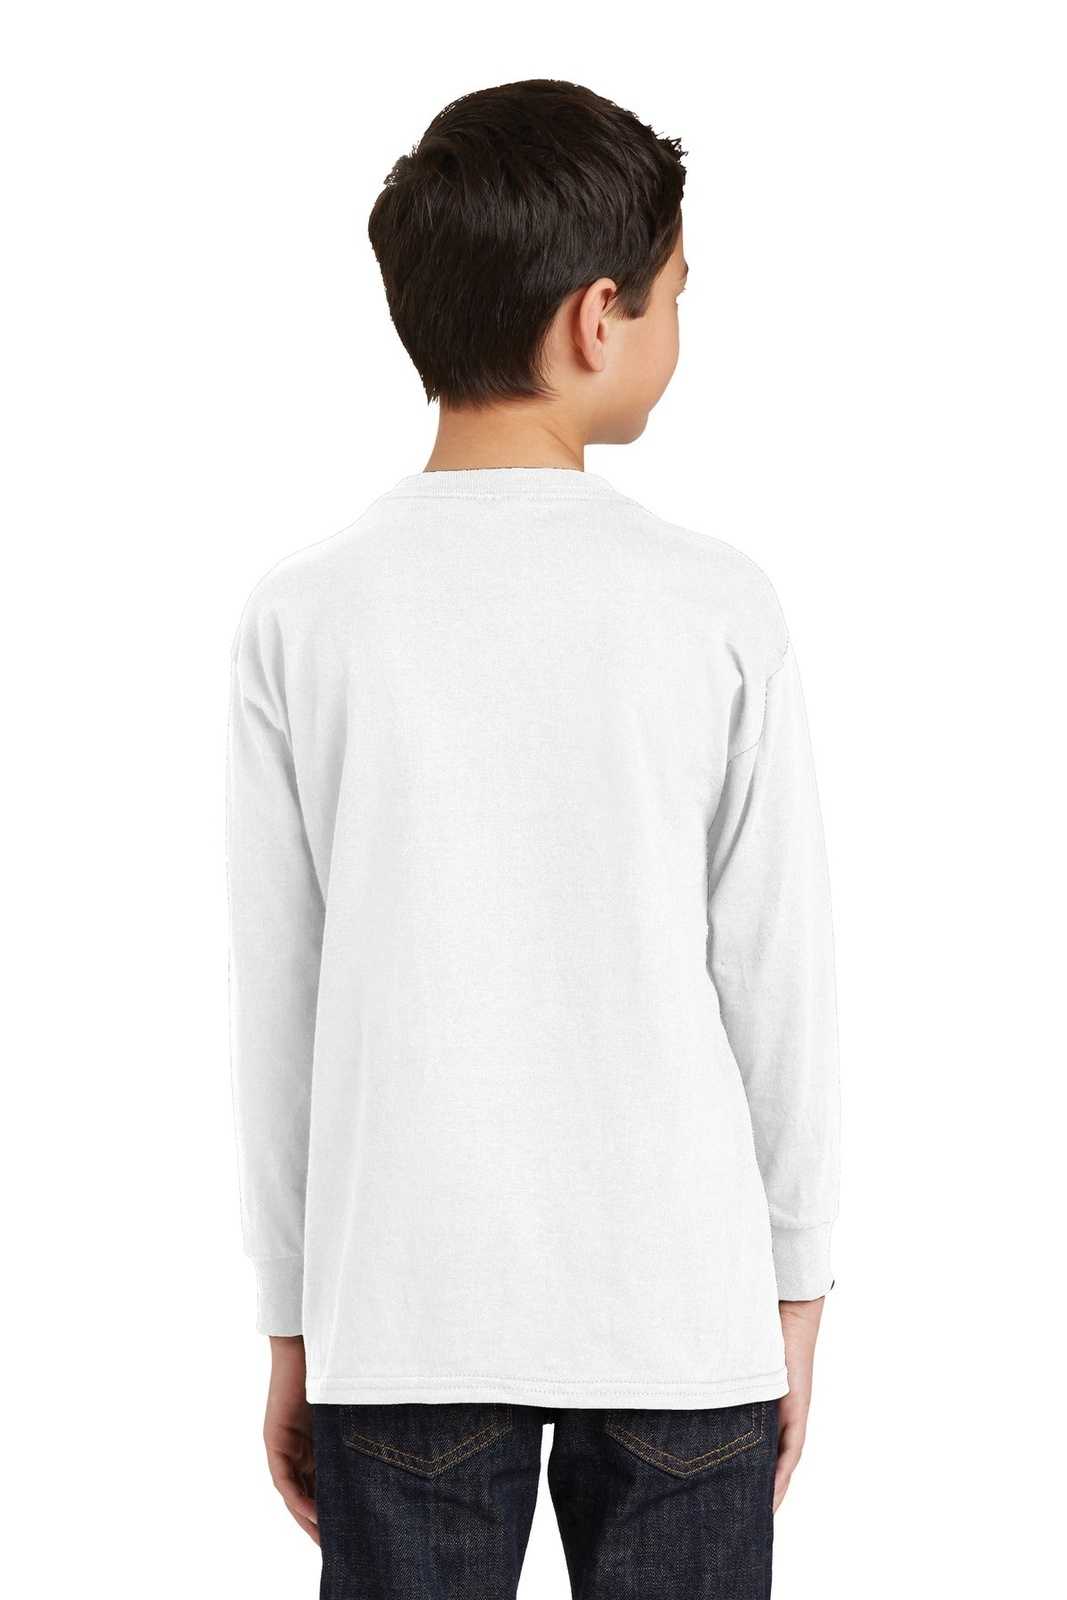 Gildan 5400B Youth Heavy Cotton 100% Cotton Long Sleeve T-Shirt - White - HIT a Double